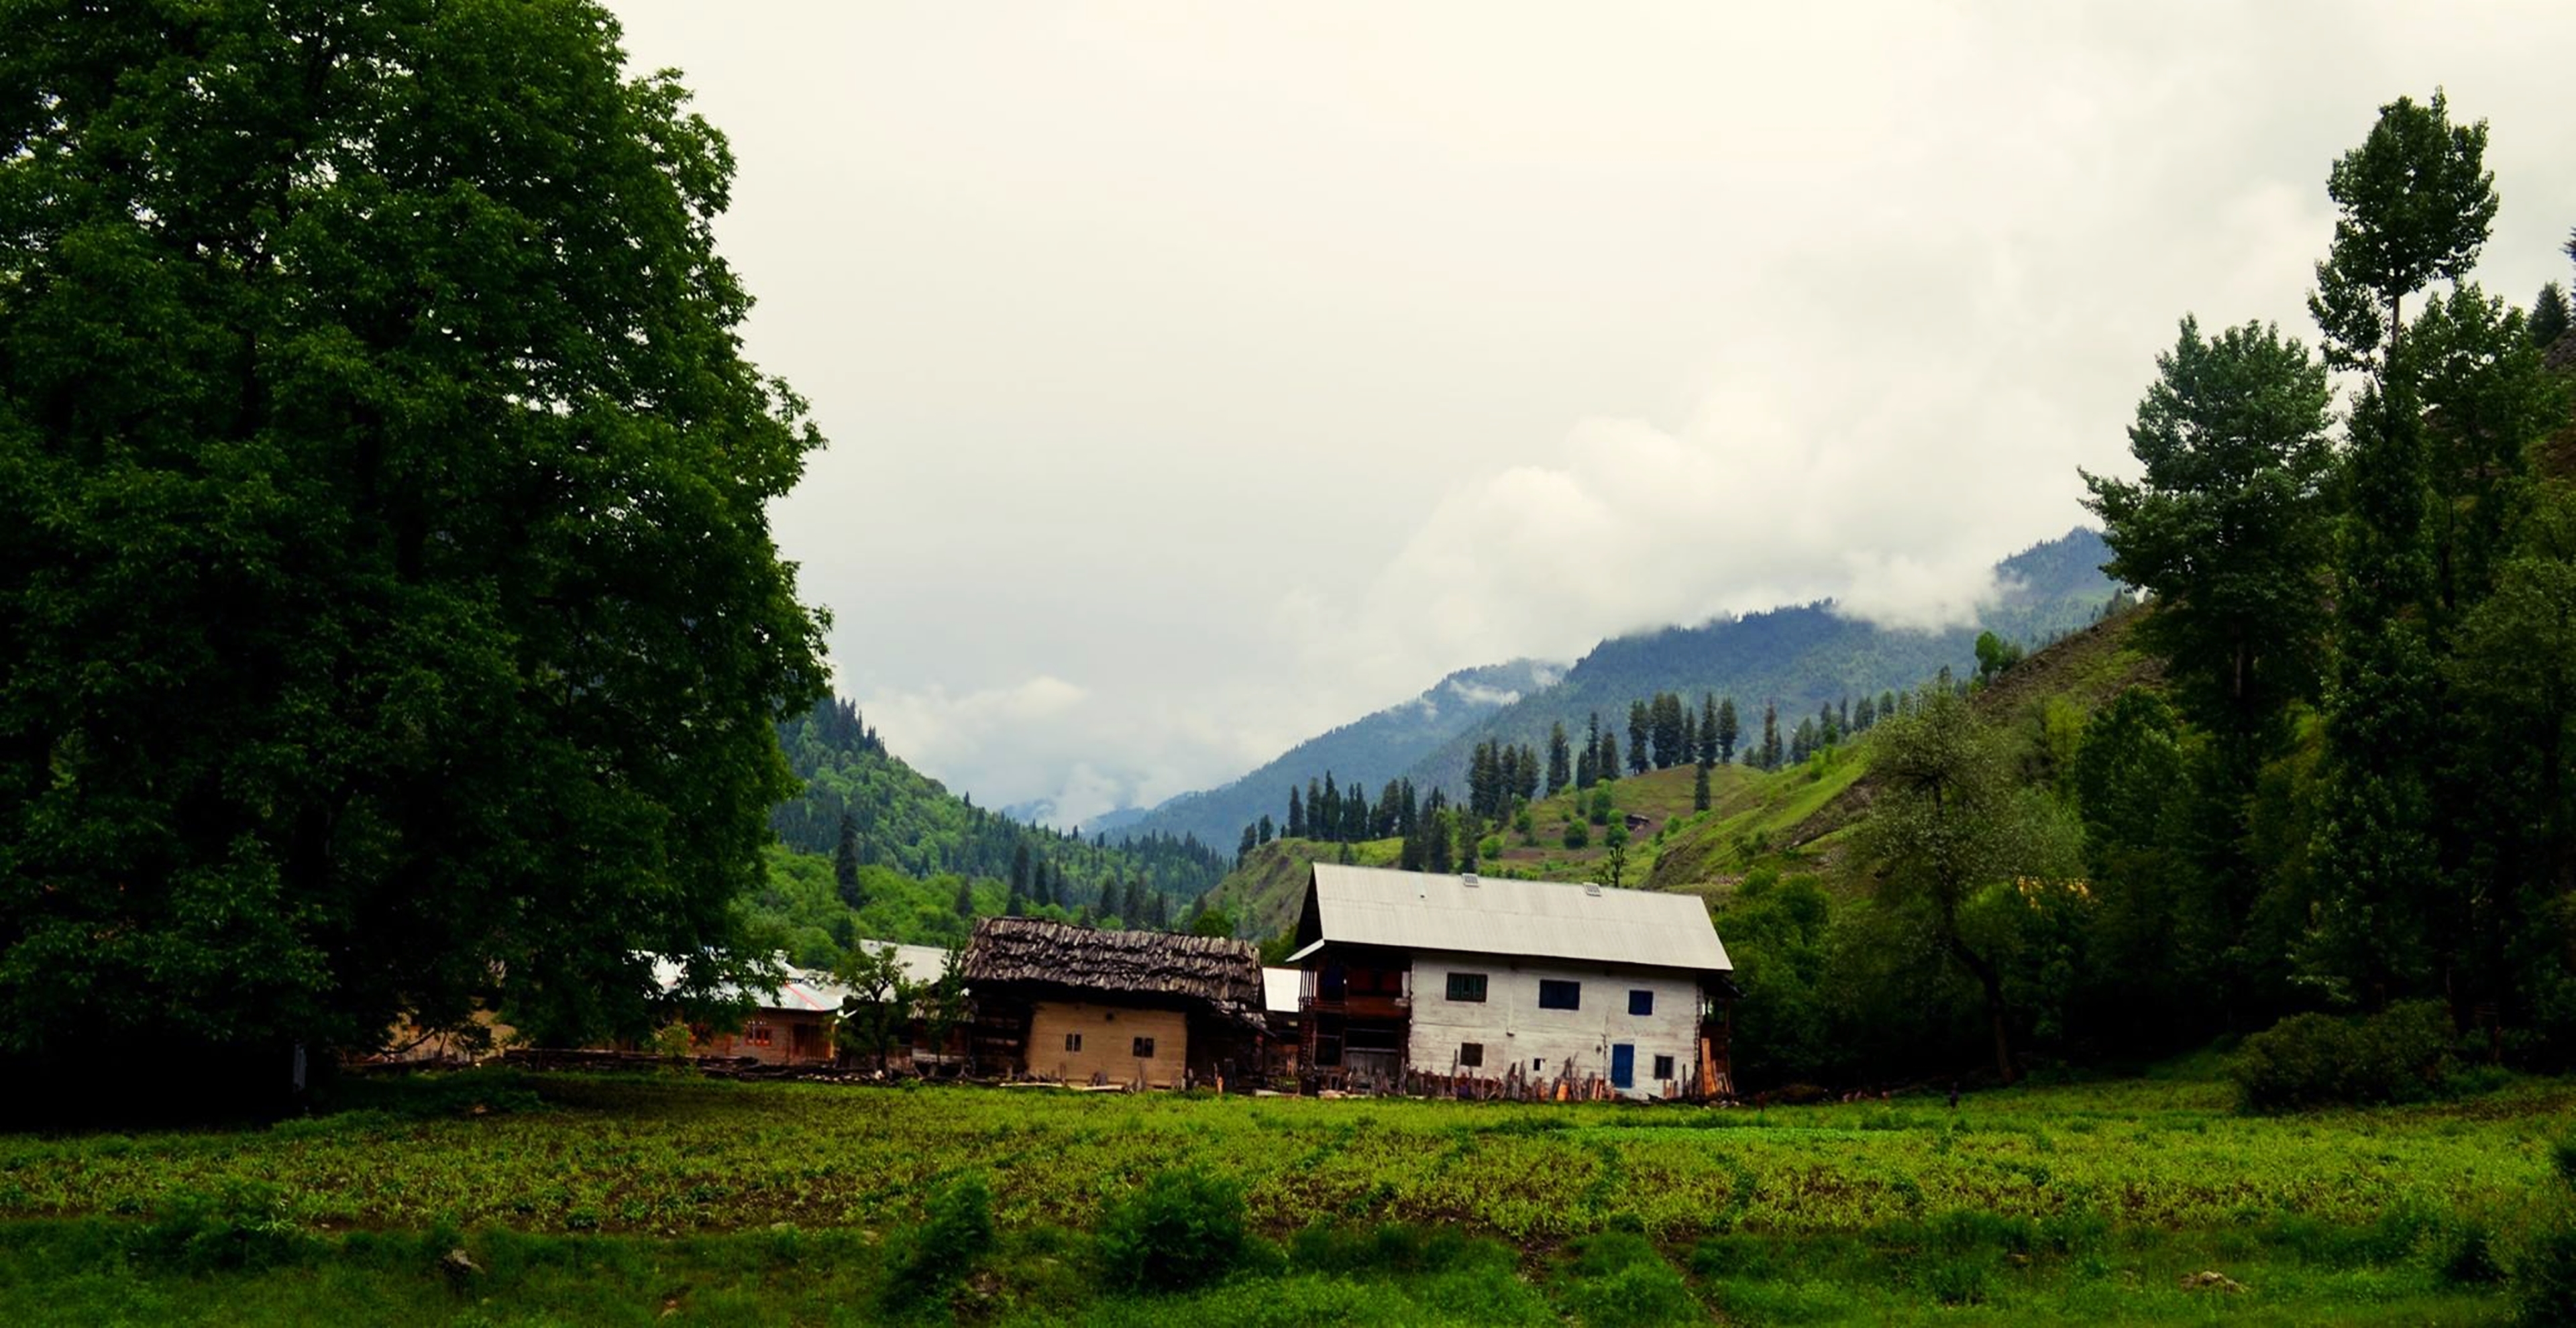 kashmir, photography, landscape, countryside, hill, hut, mountain, pakistan, village